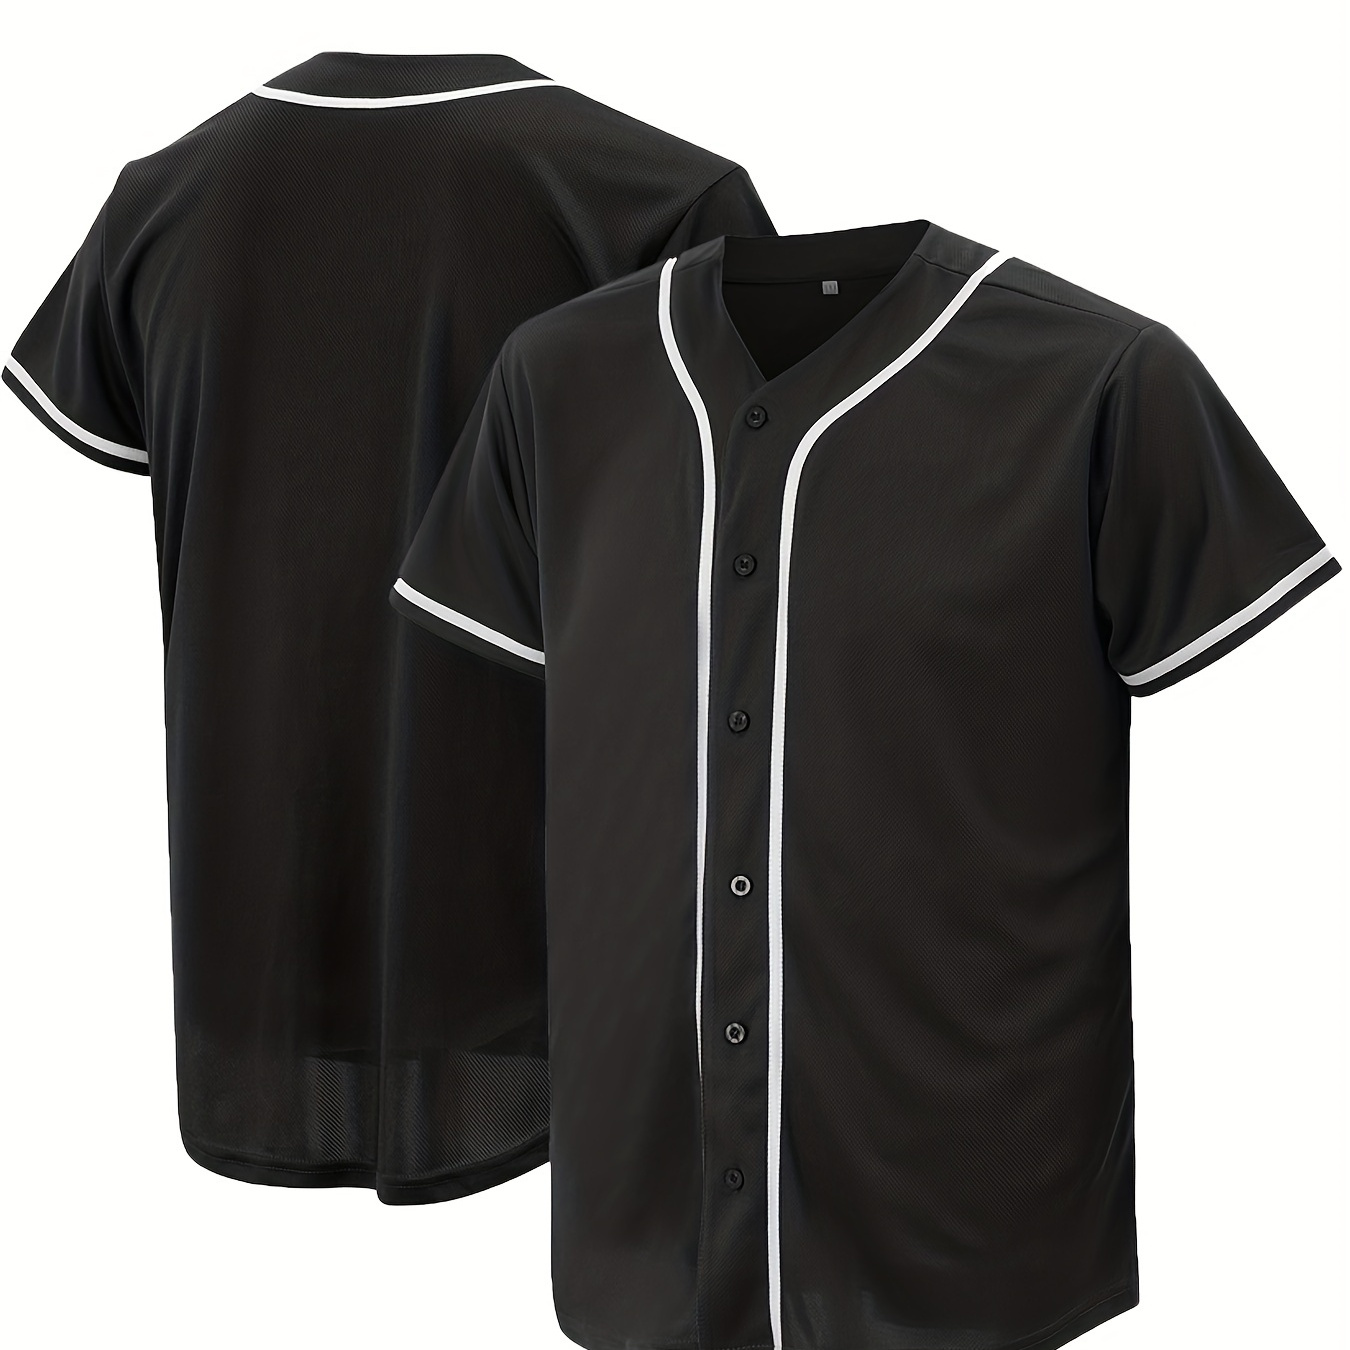 

Men's Blank Baseball Jerseys Plain Casual Short-sleeved Button T-shirts, Simple Fashion Sports Uniform Tops